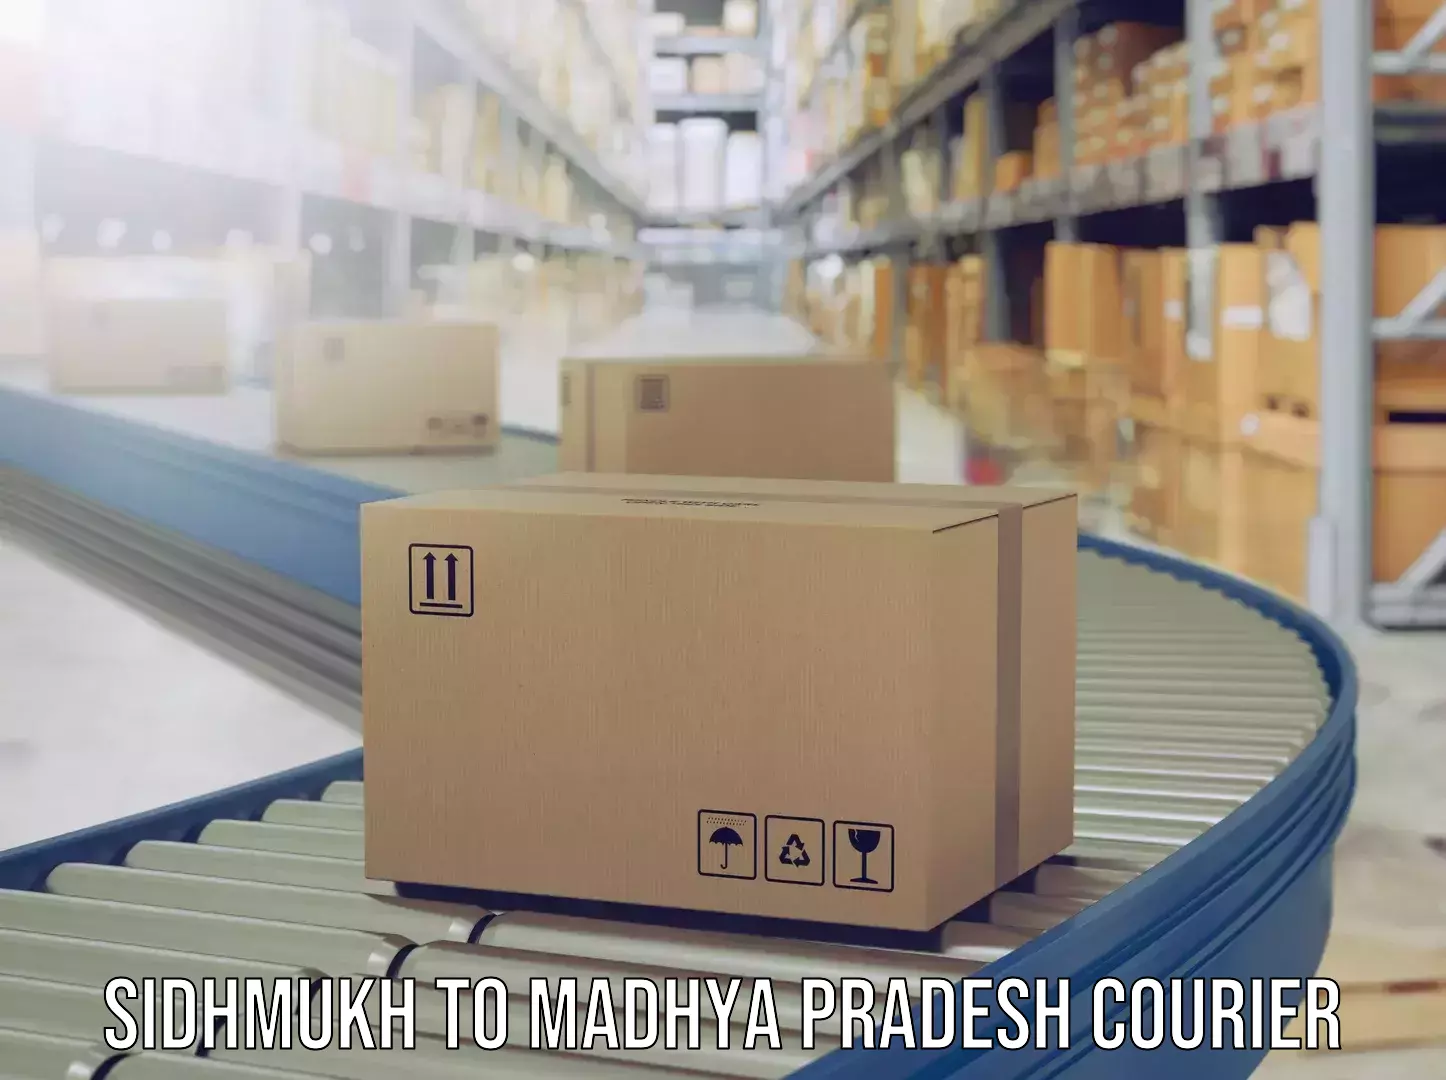 Luggage delivery app Sidhmukh to Madhya Pradesh